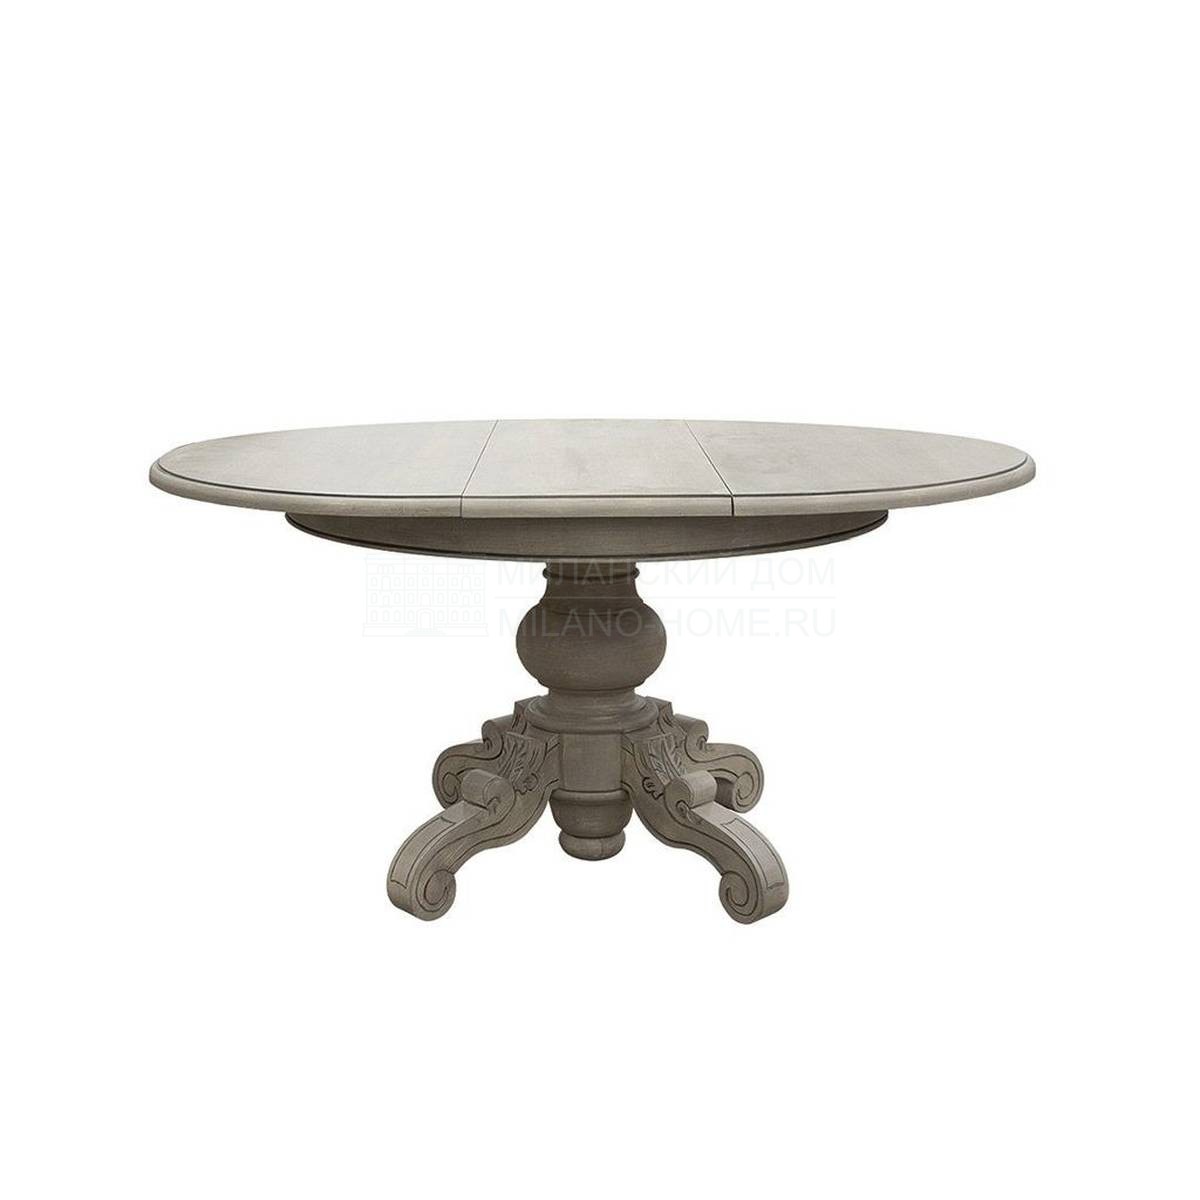 Круглый стол M-10440 round dining table из Испании фабрики GUADARTE